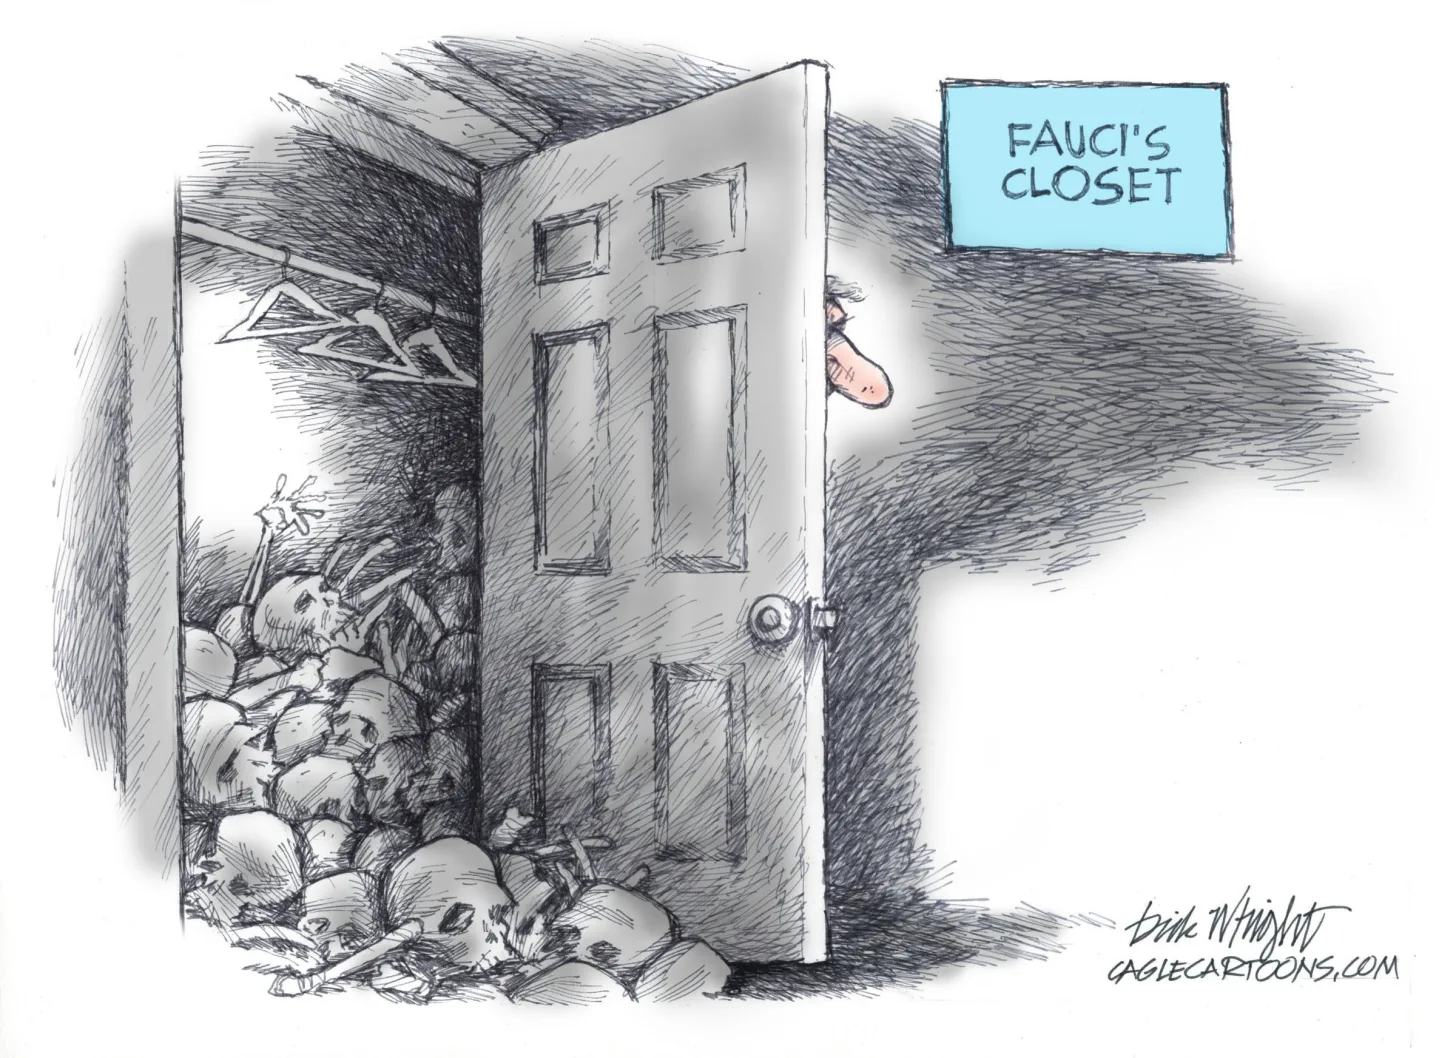 Fauci's Closet